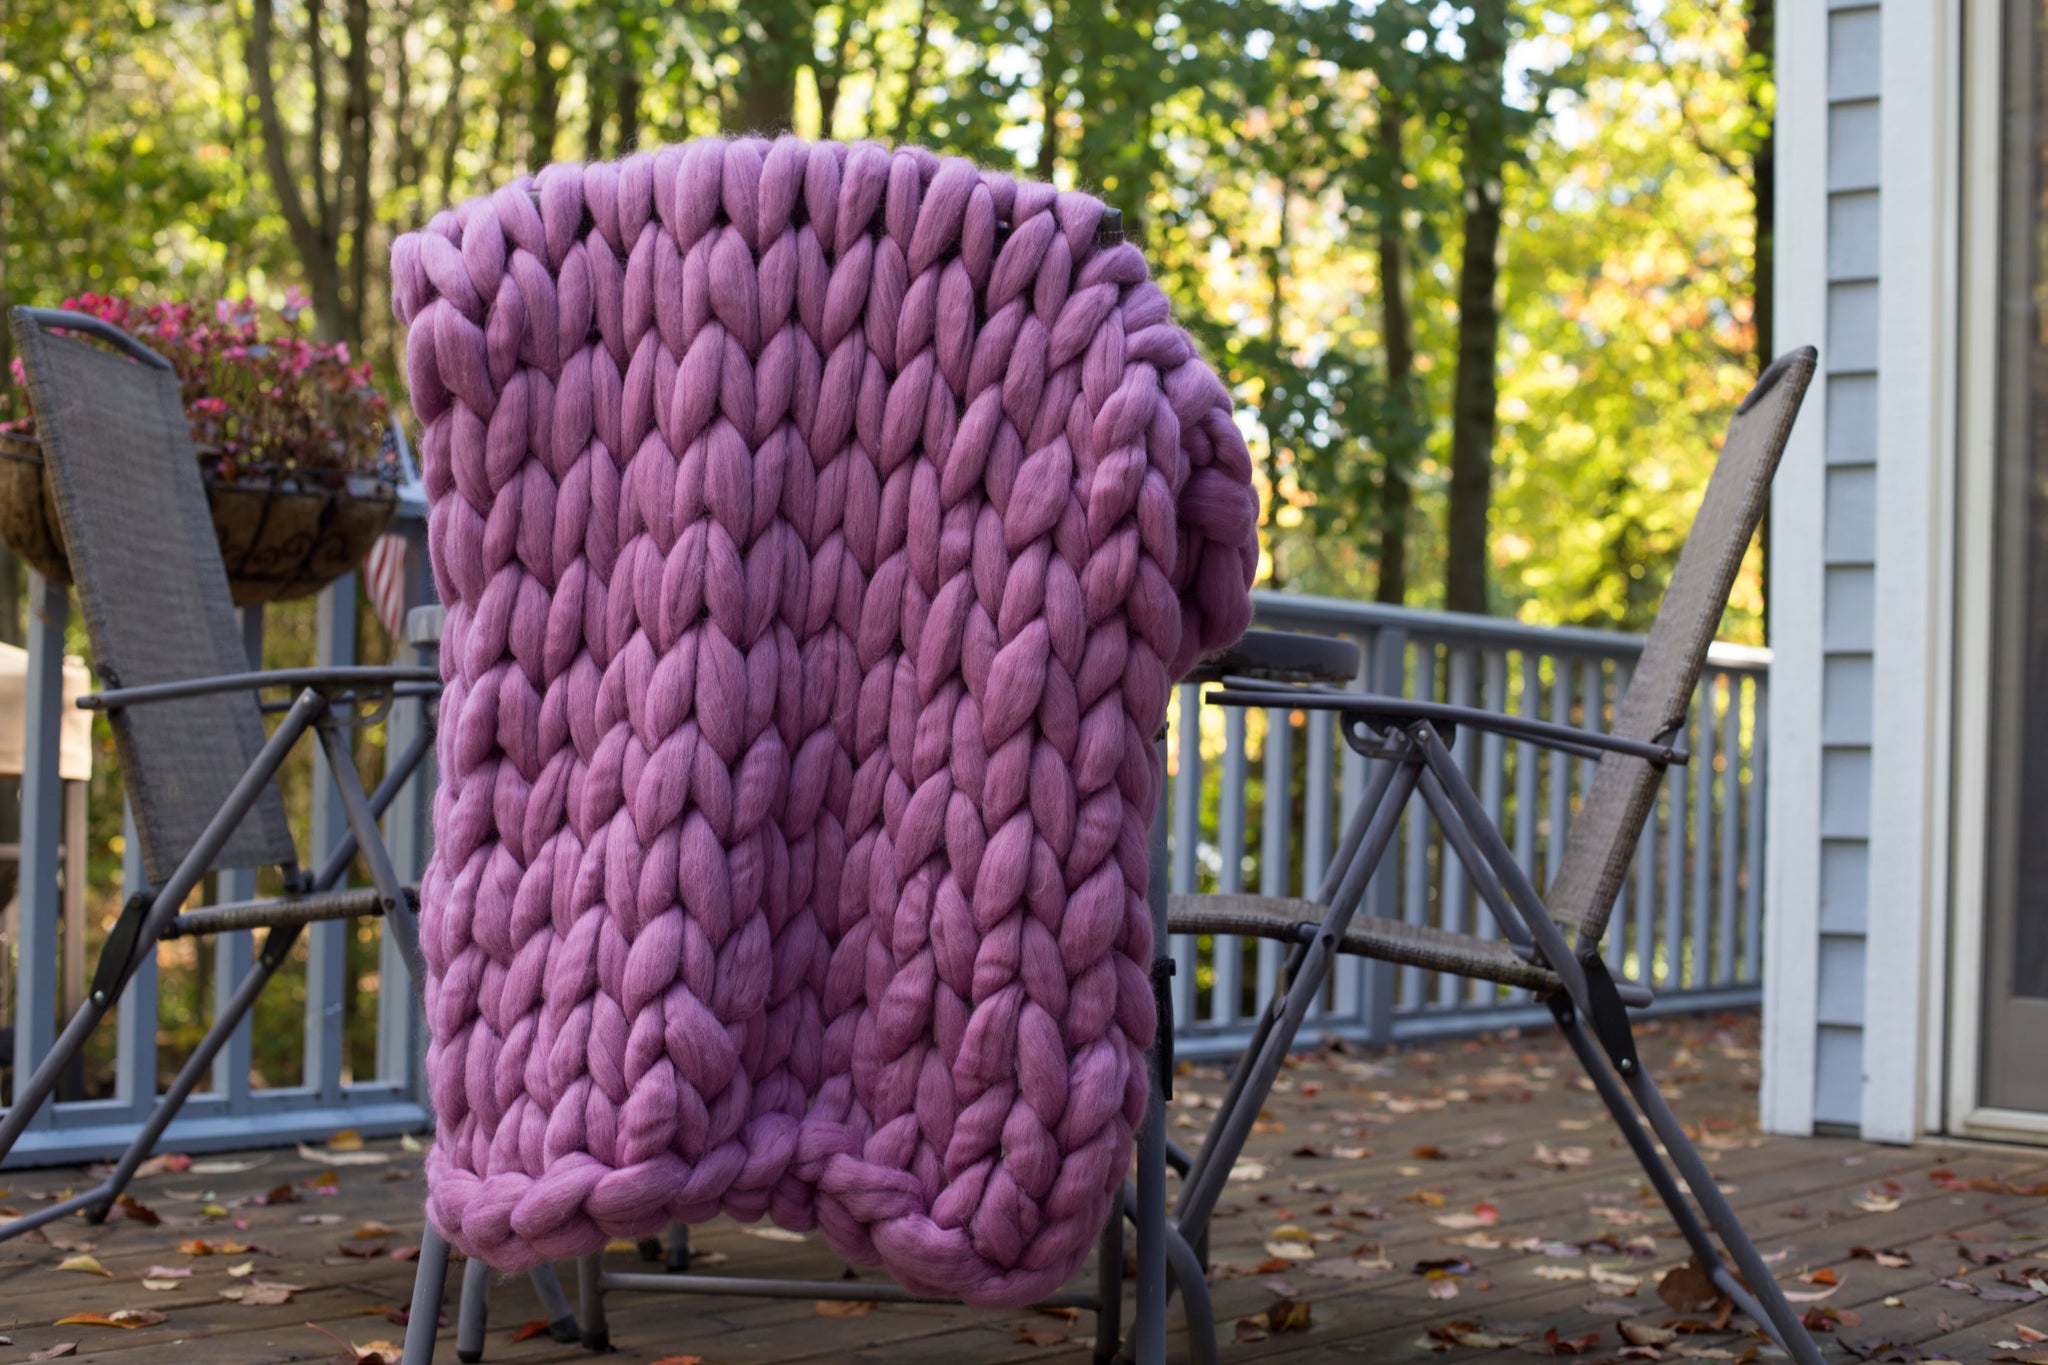 Chunky Knit Blanket Making Kit – Blanket In A Box